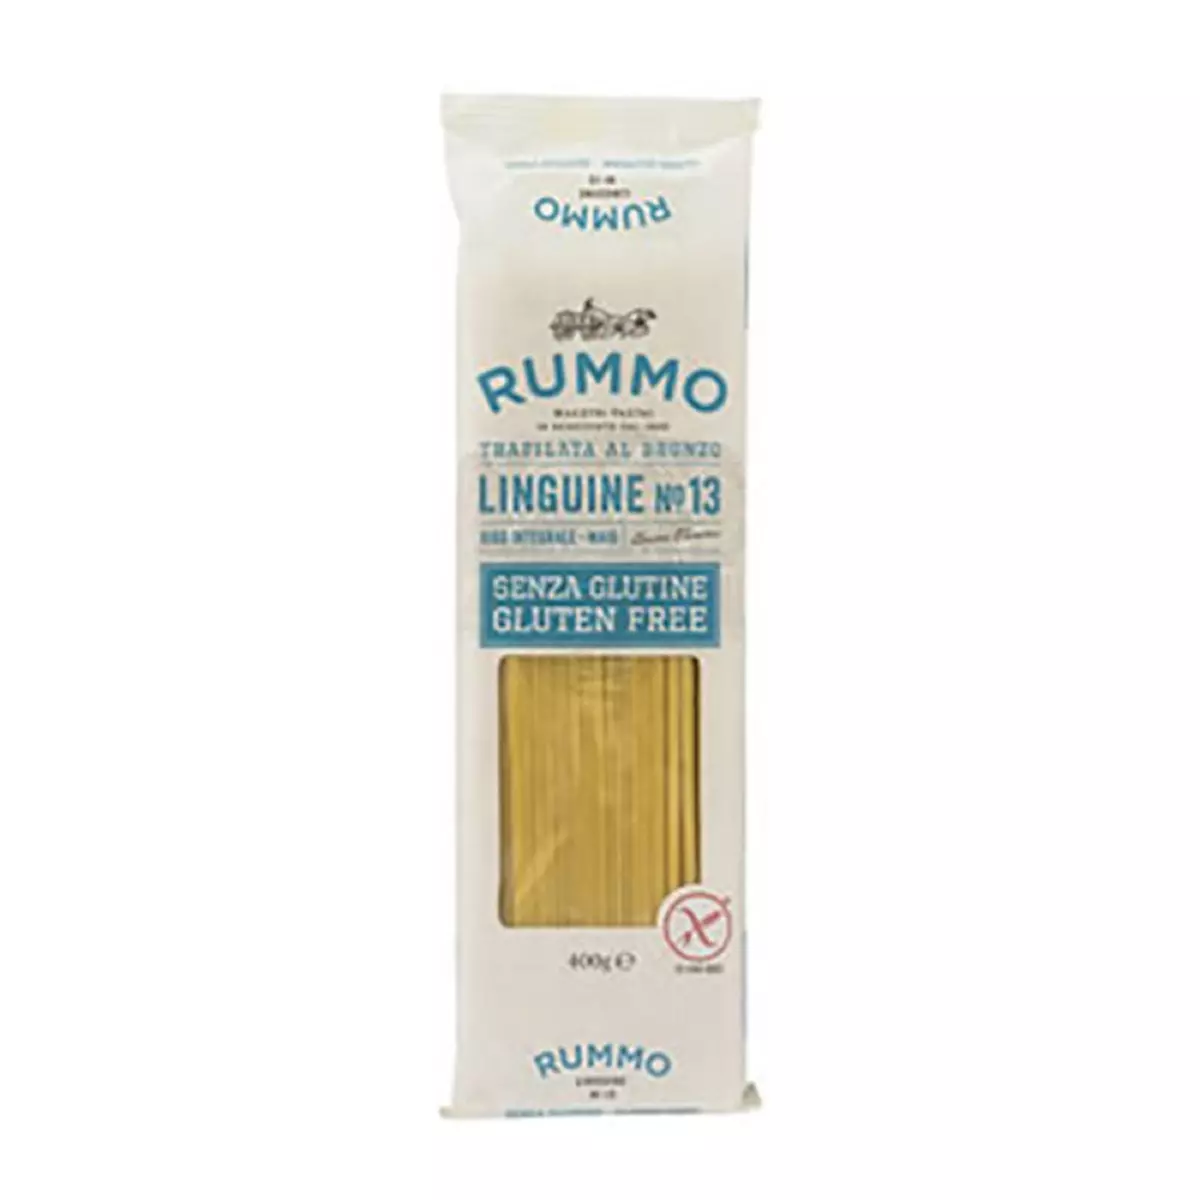 RUMMO Linguine n13 sans gluten 400g